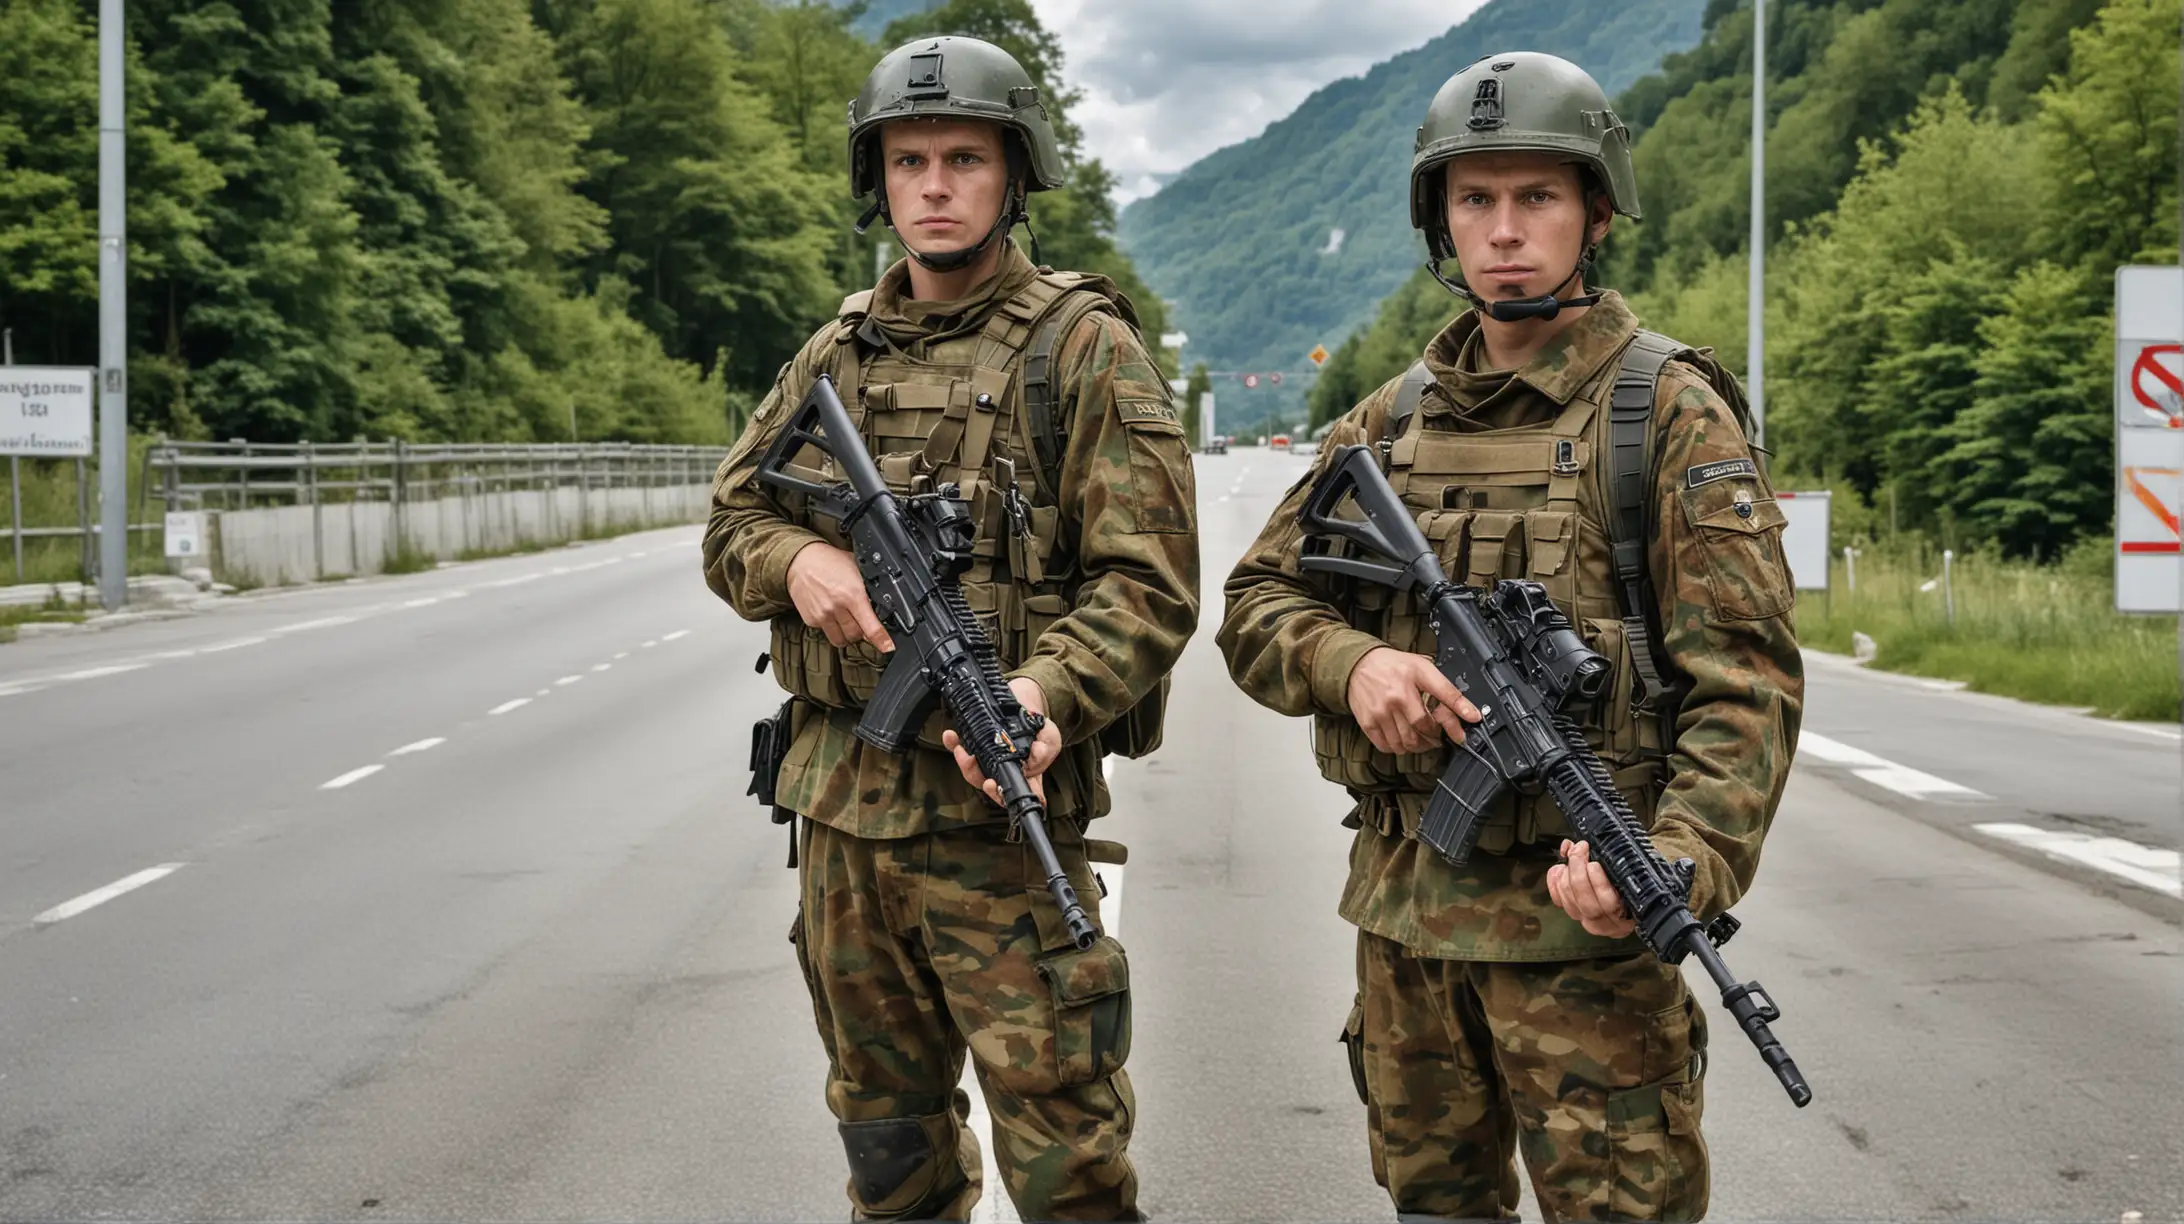 Modern Liechtenstein Army Soldiers Guarding Road Checkpoint with G36 Rifles